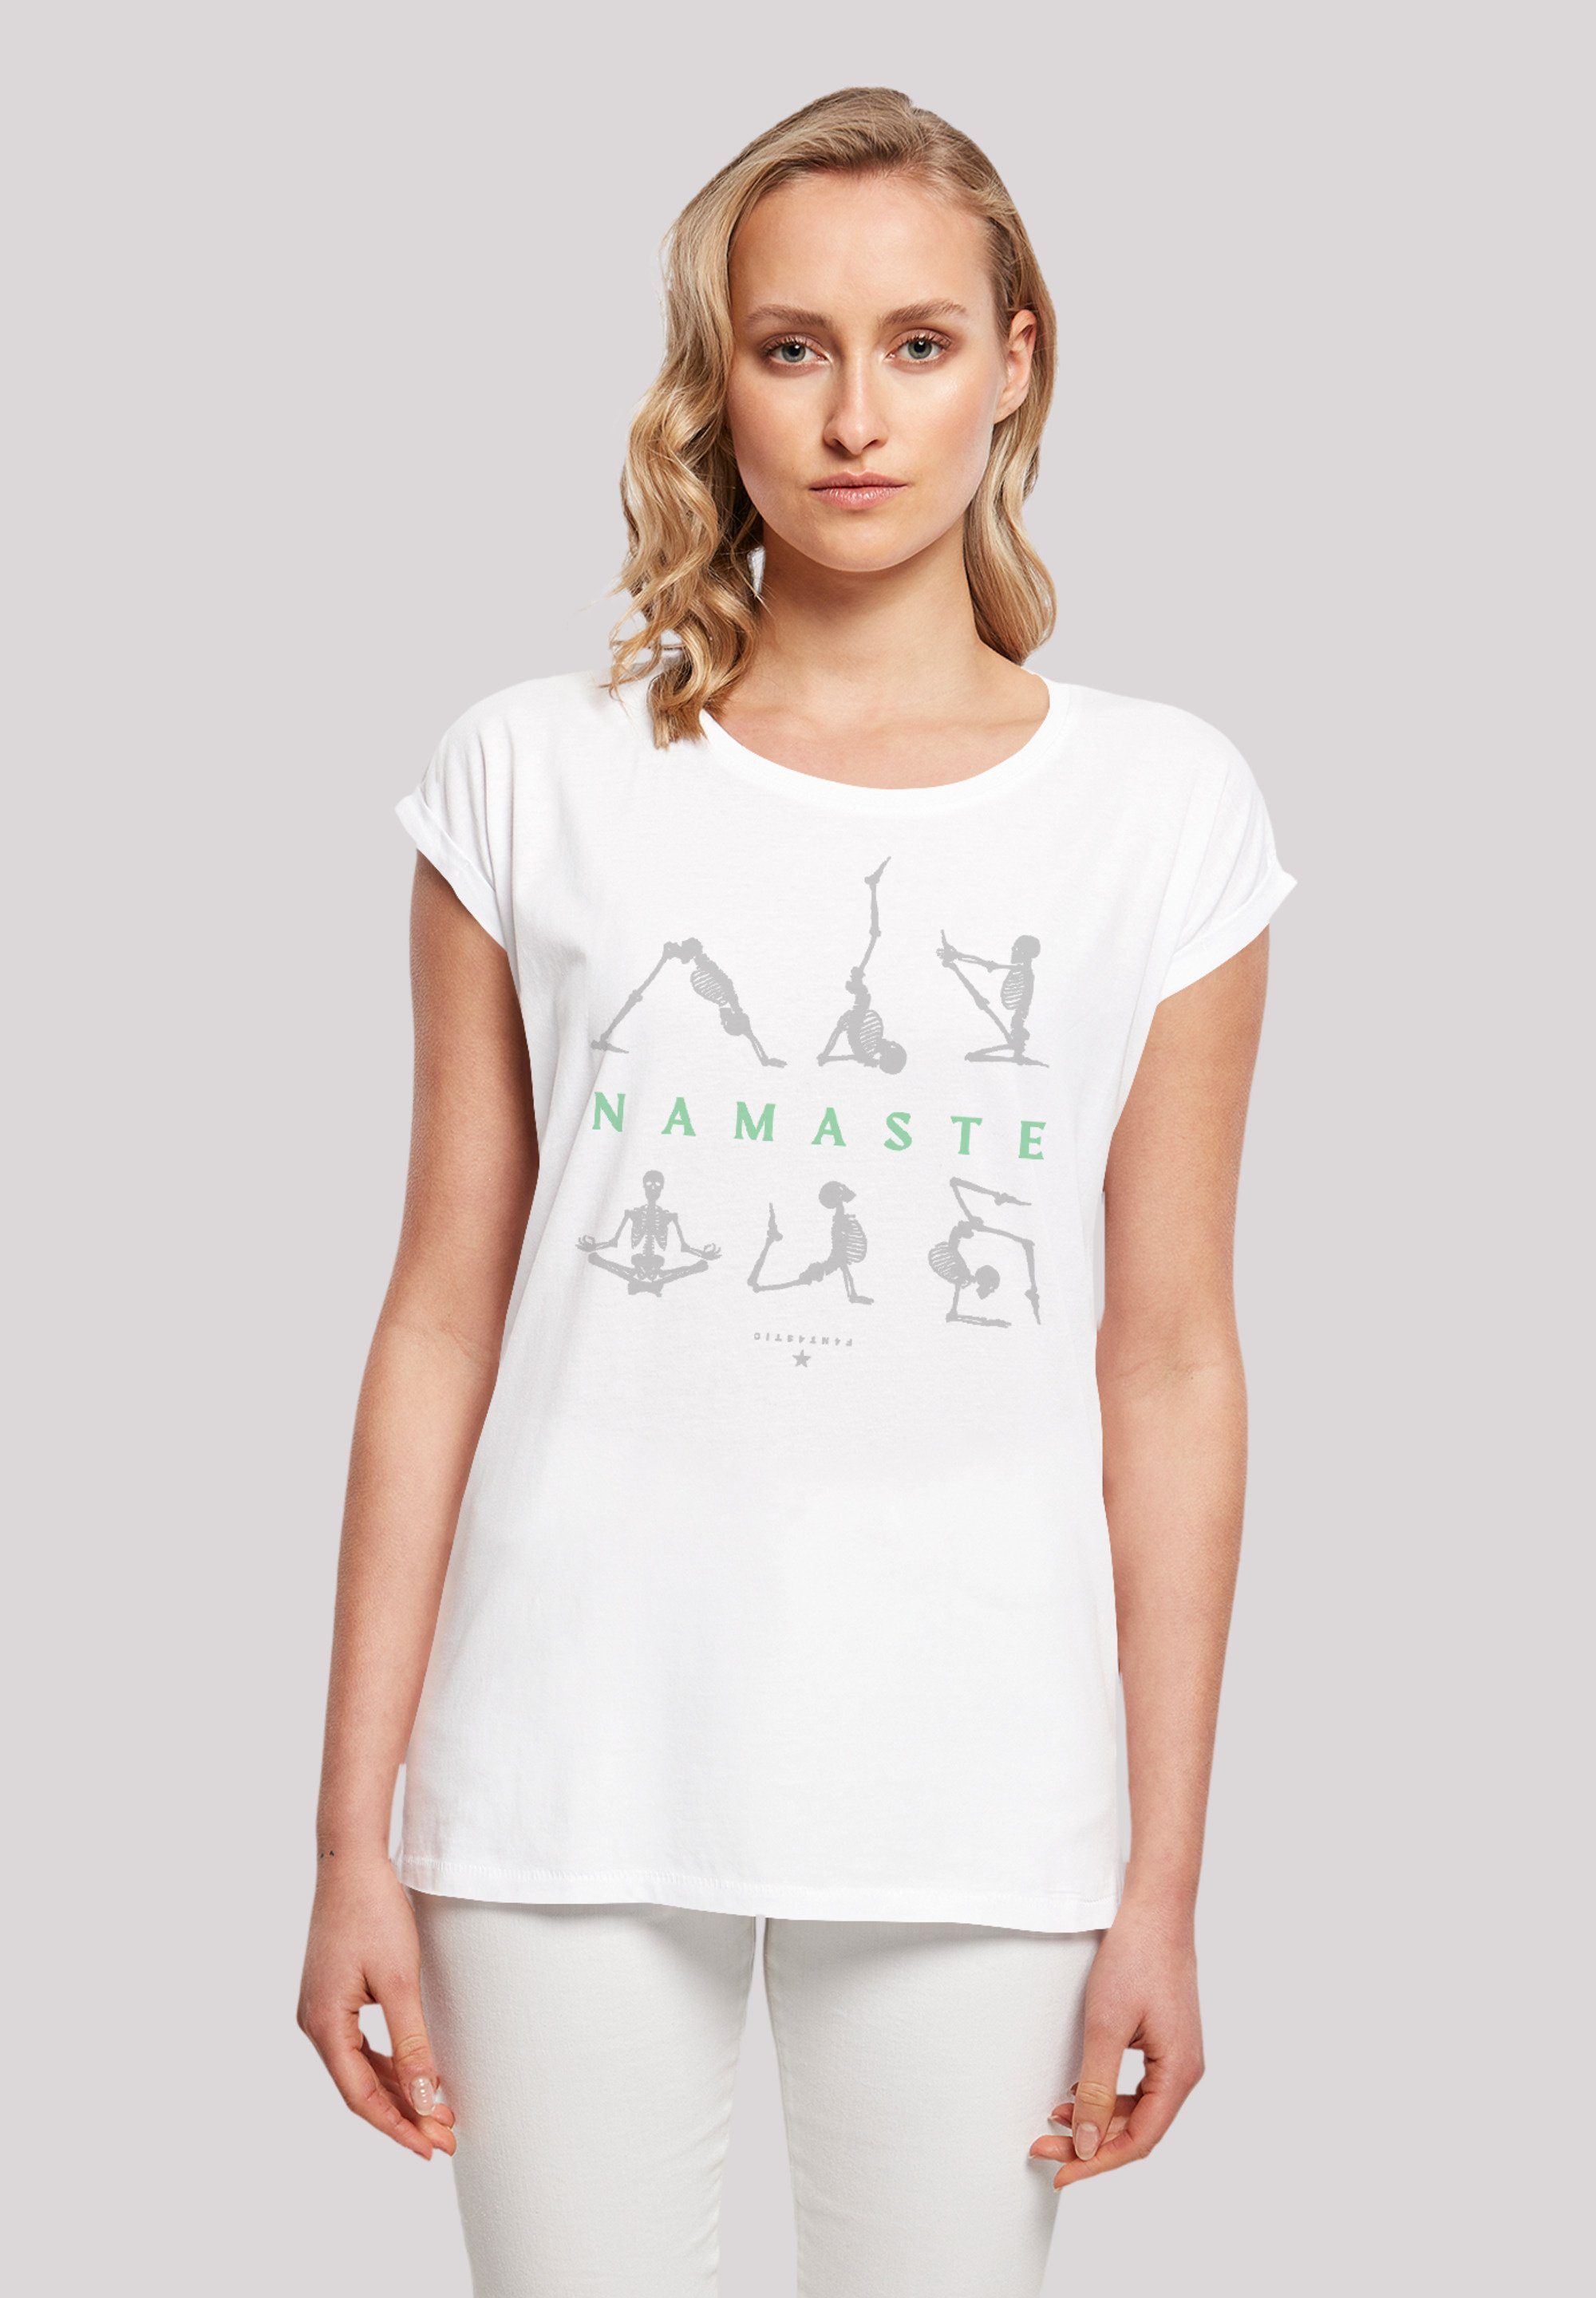 und T-Shirt F4NT4STIC Namaste verkürzte Print, Skelett Ärmel Yoga Schnitt Langer Halloween